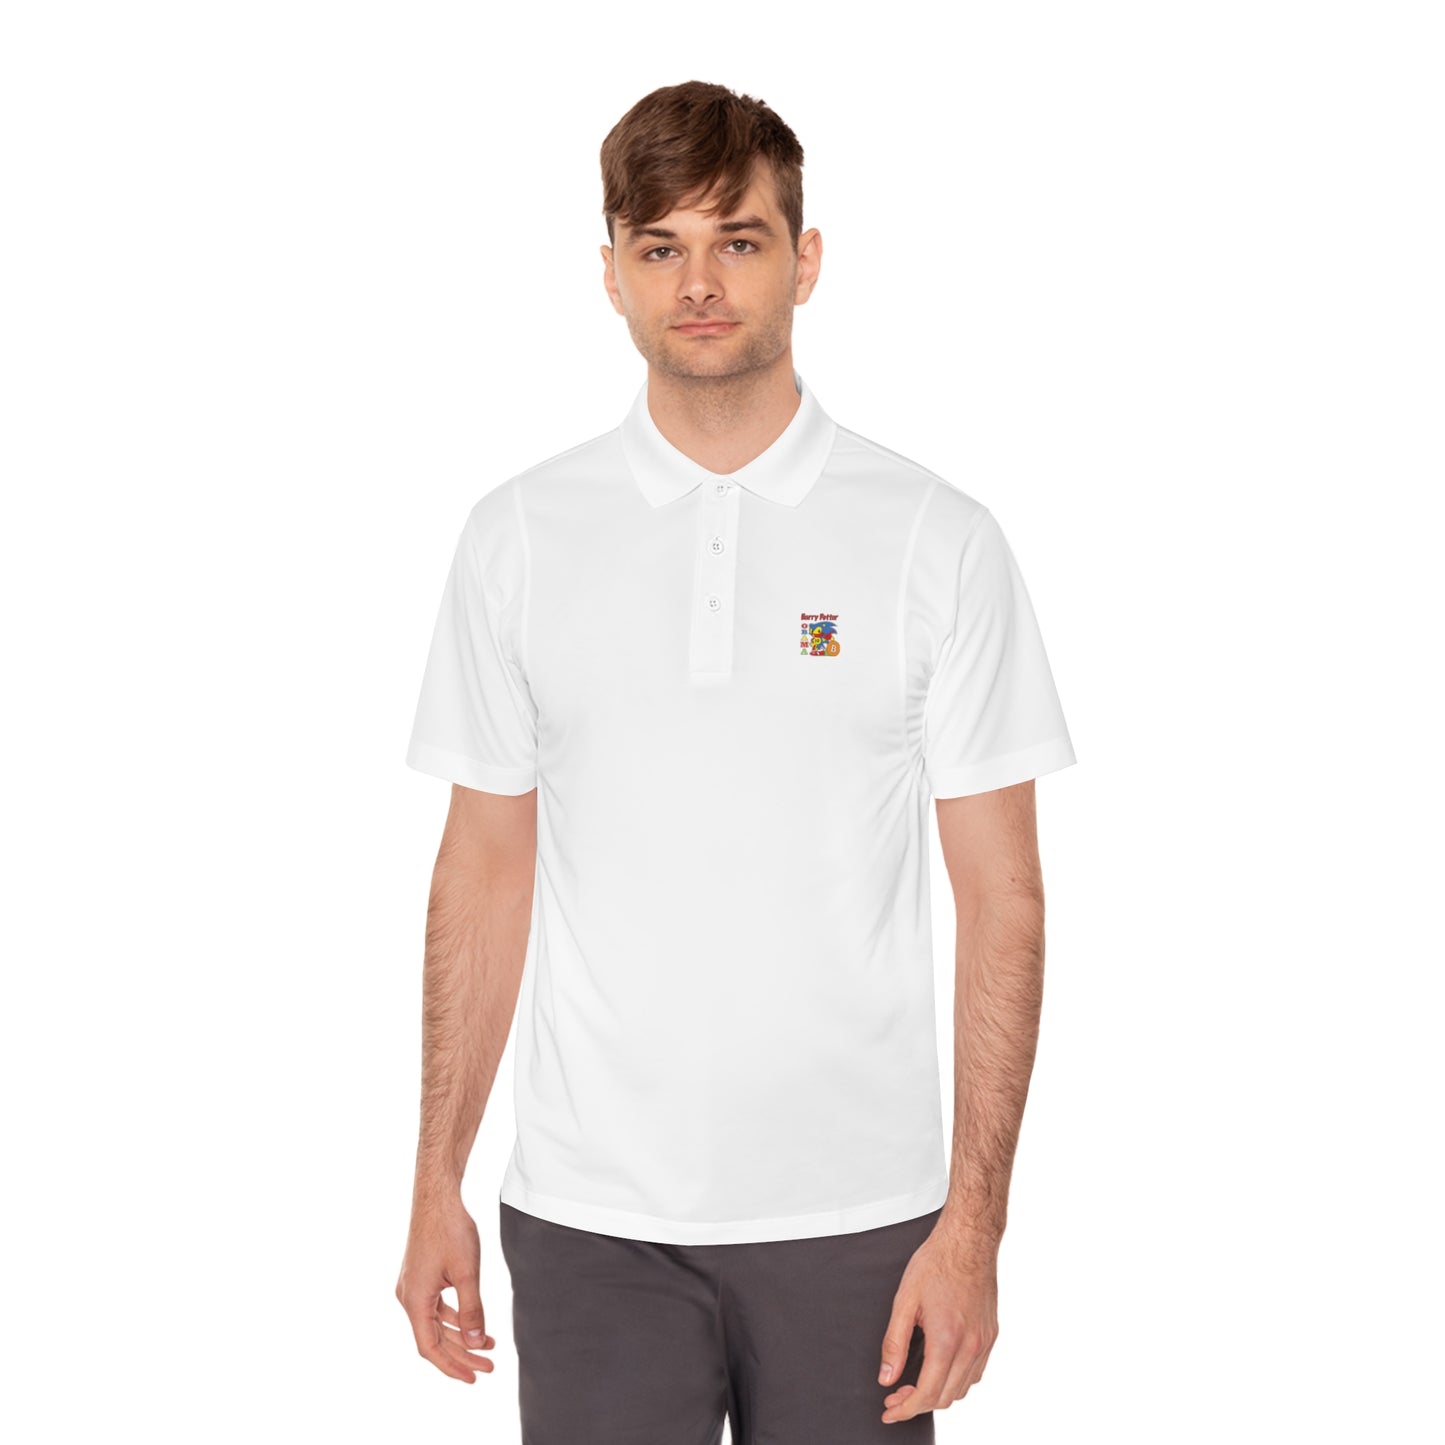 HPOS10I Men's Sport Polo Shirt